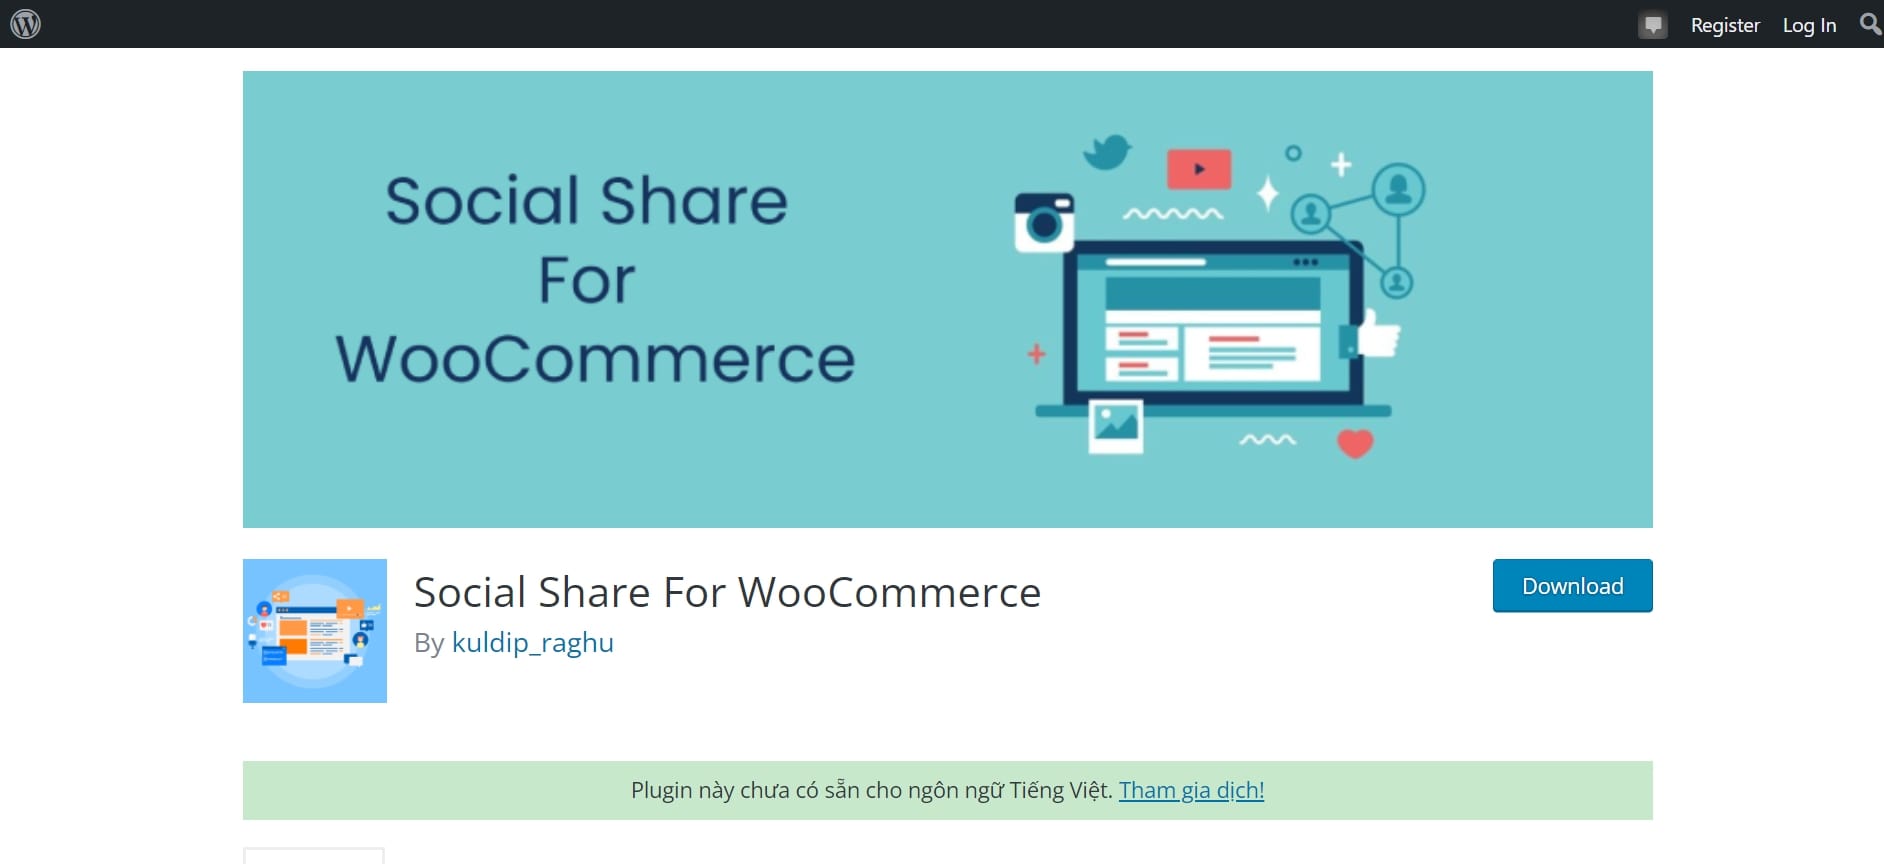 Social Share For WooCommerce